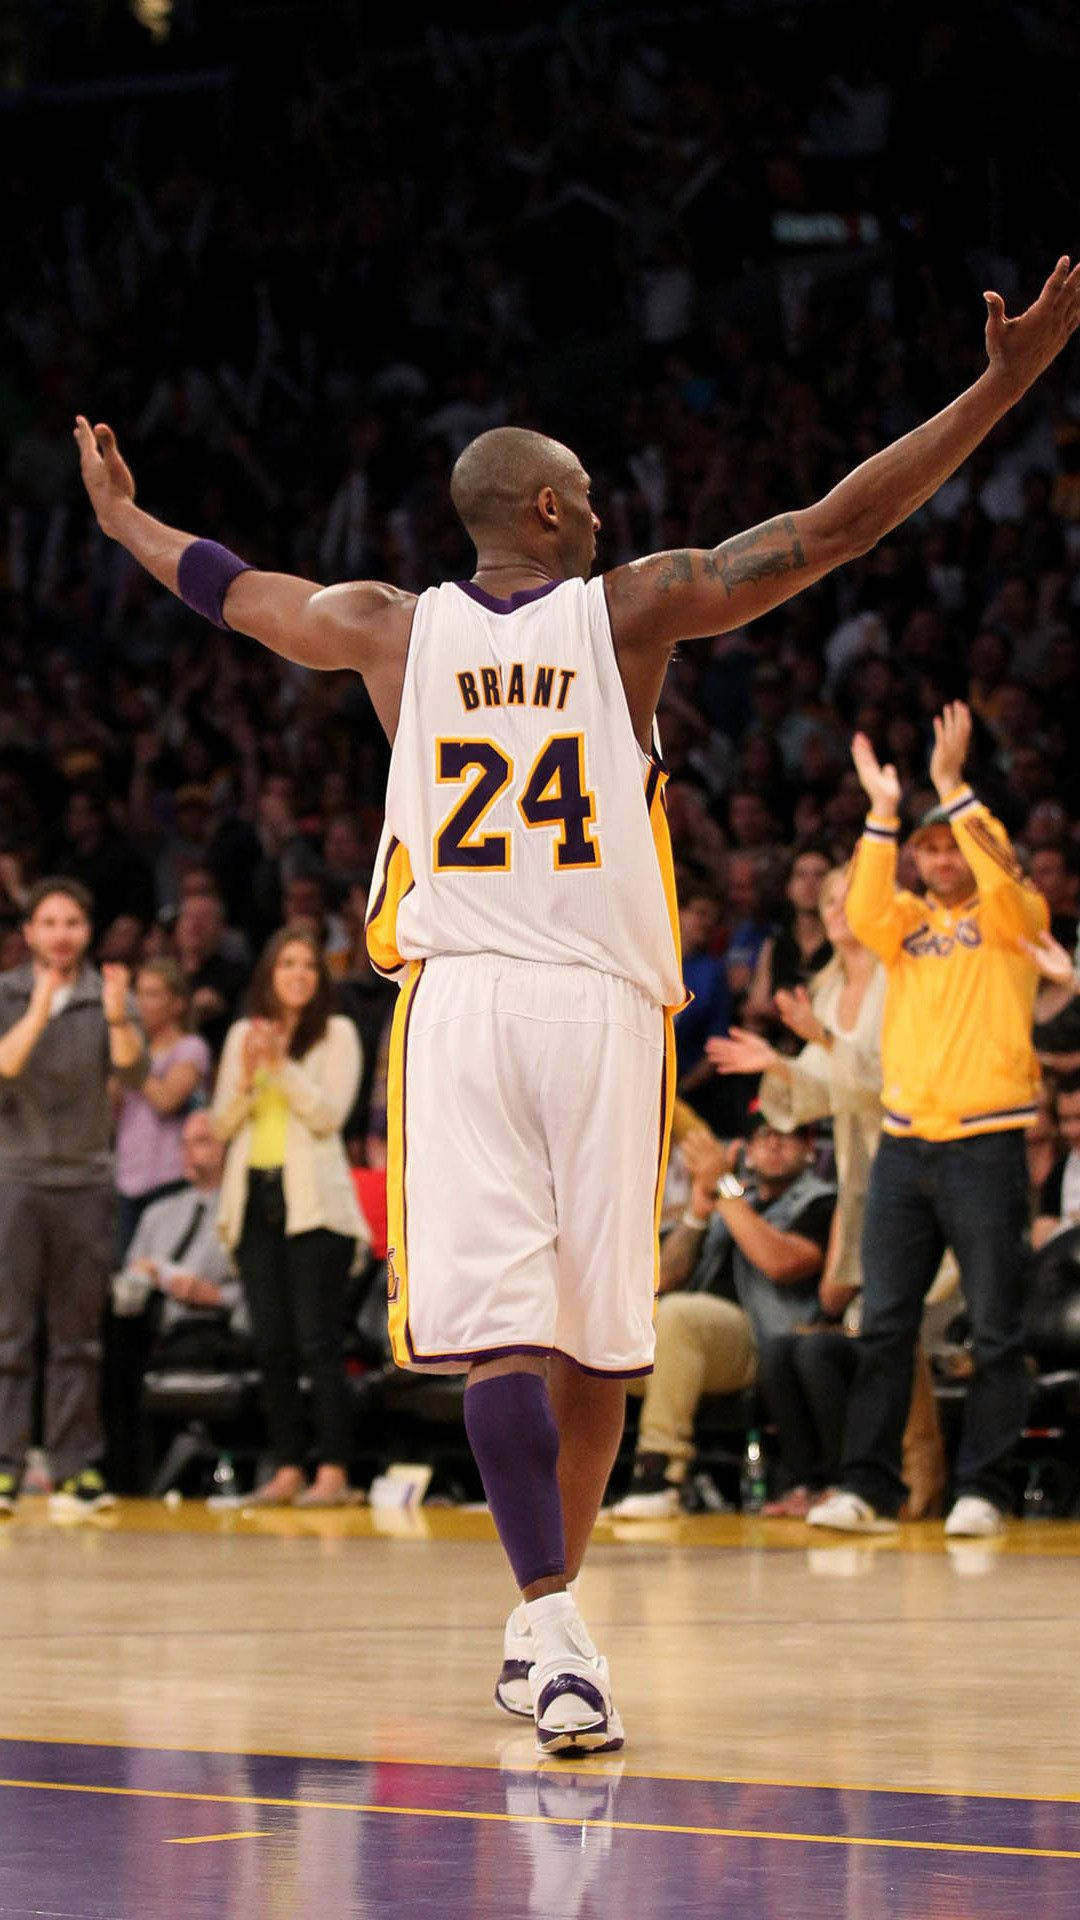 Magliadei Lakers Bianca Di Kobe Bryant Per Iphone. Sfondo